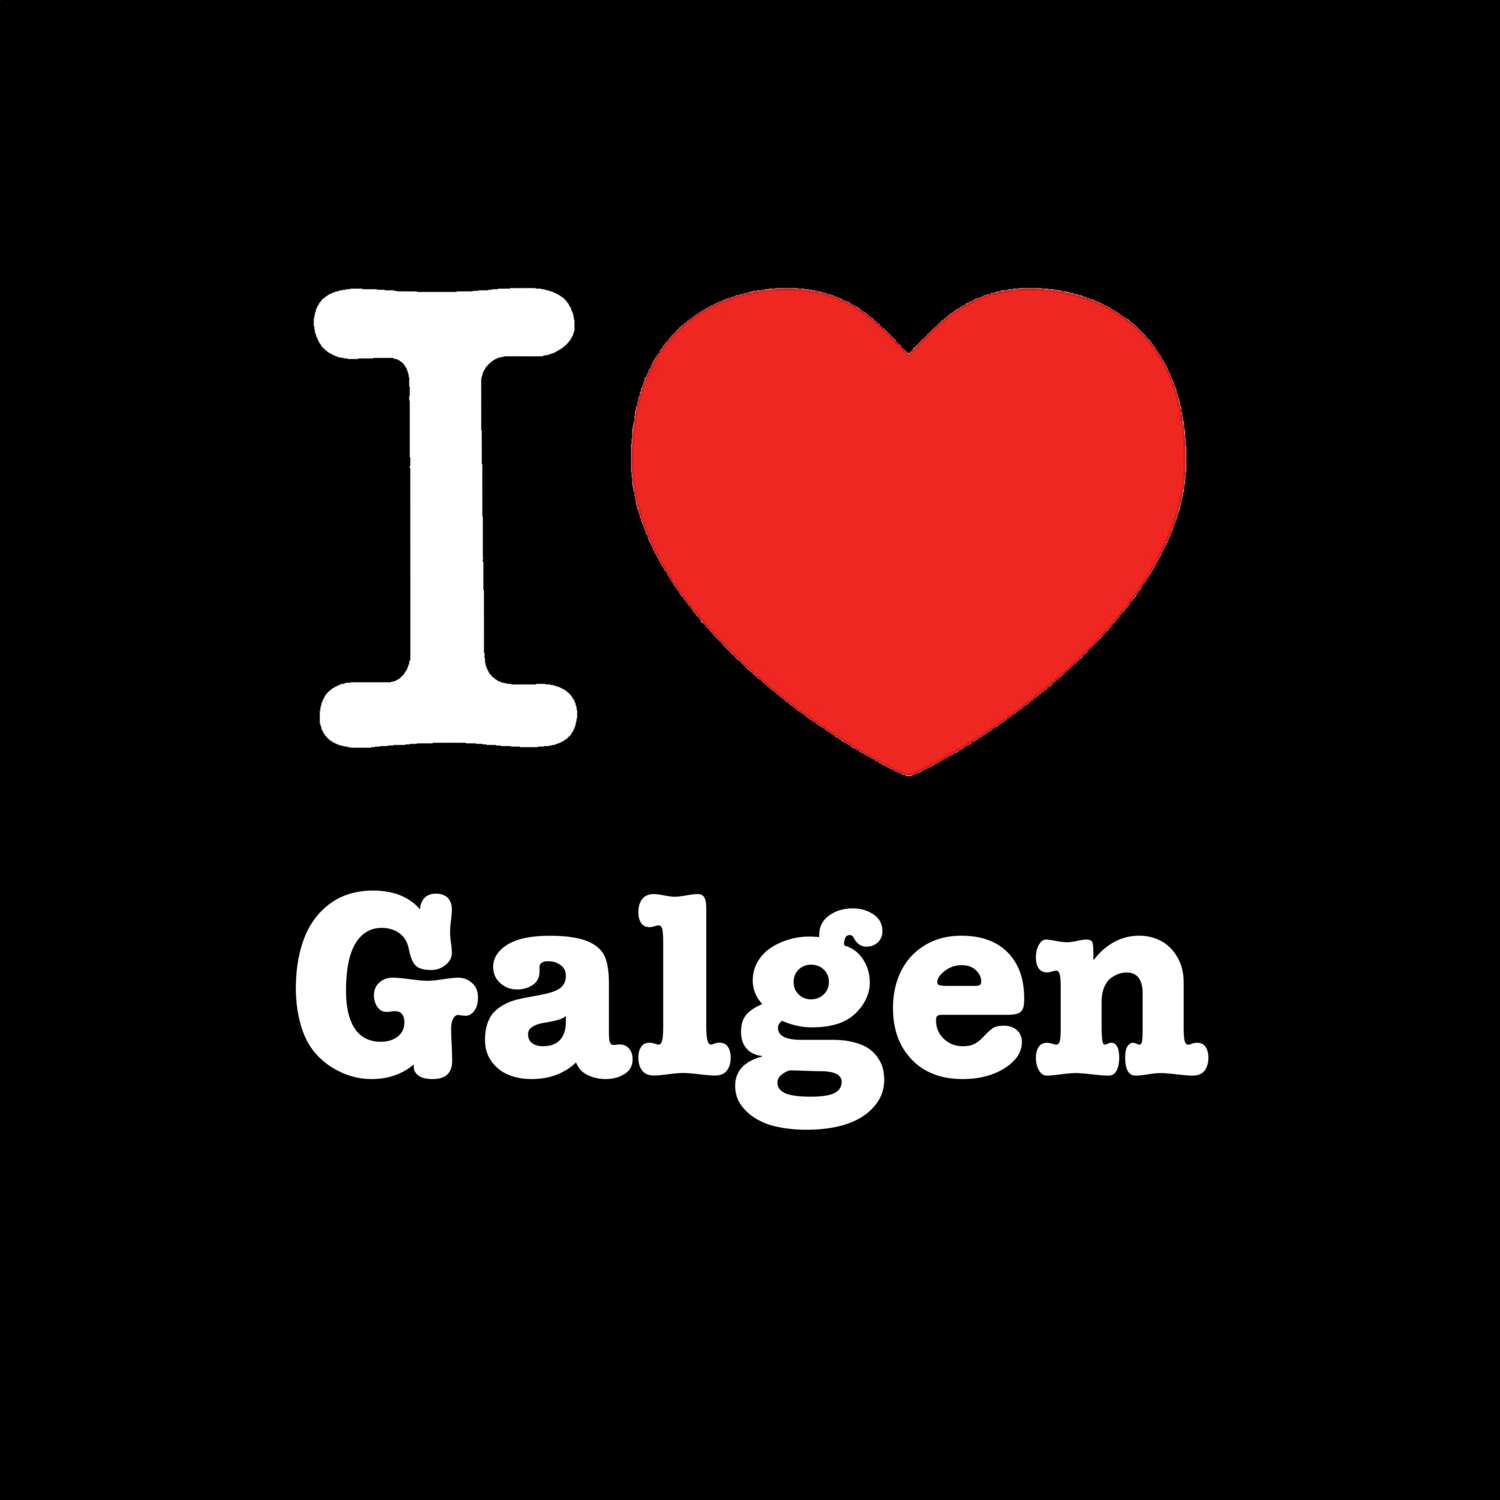 Galgen T-Shirt »I love«